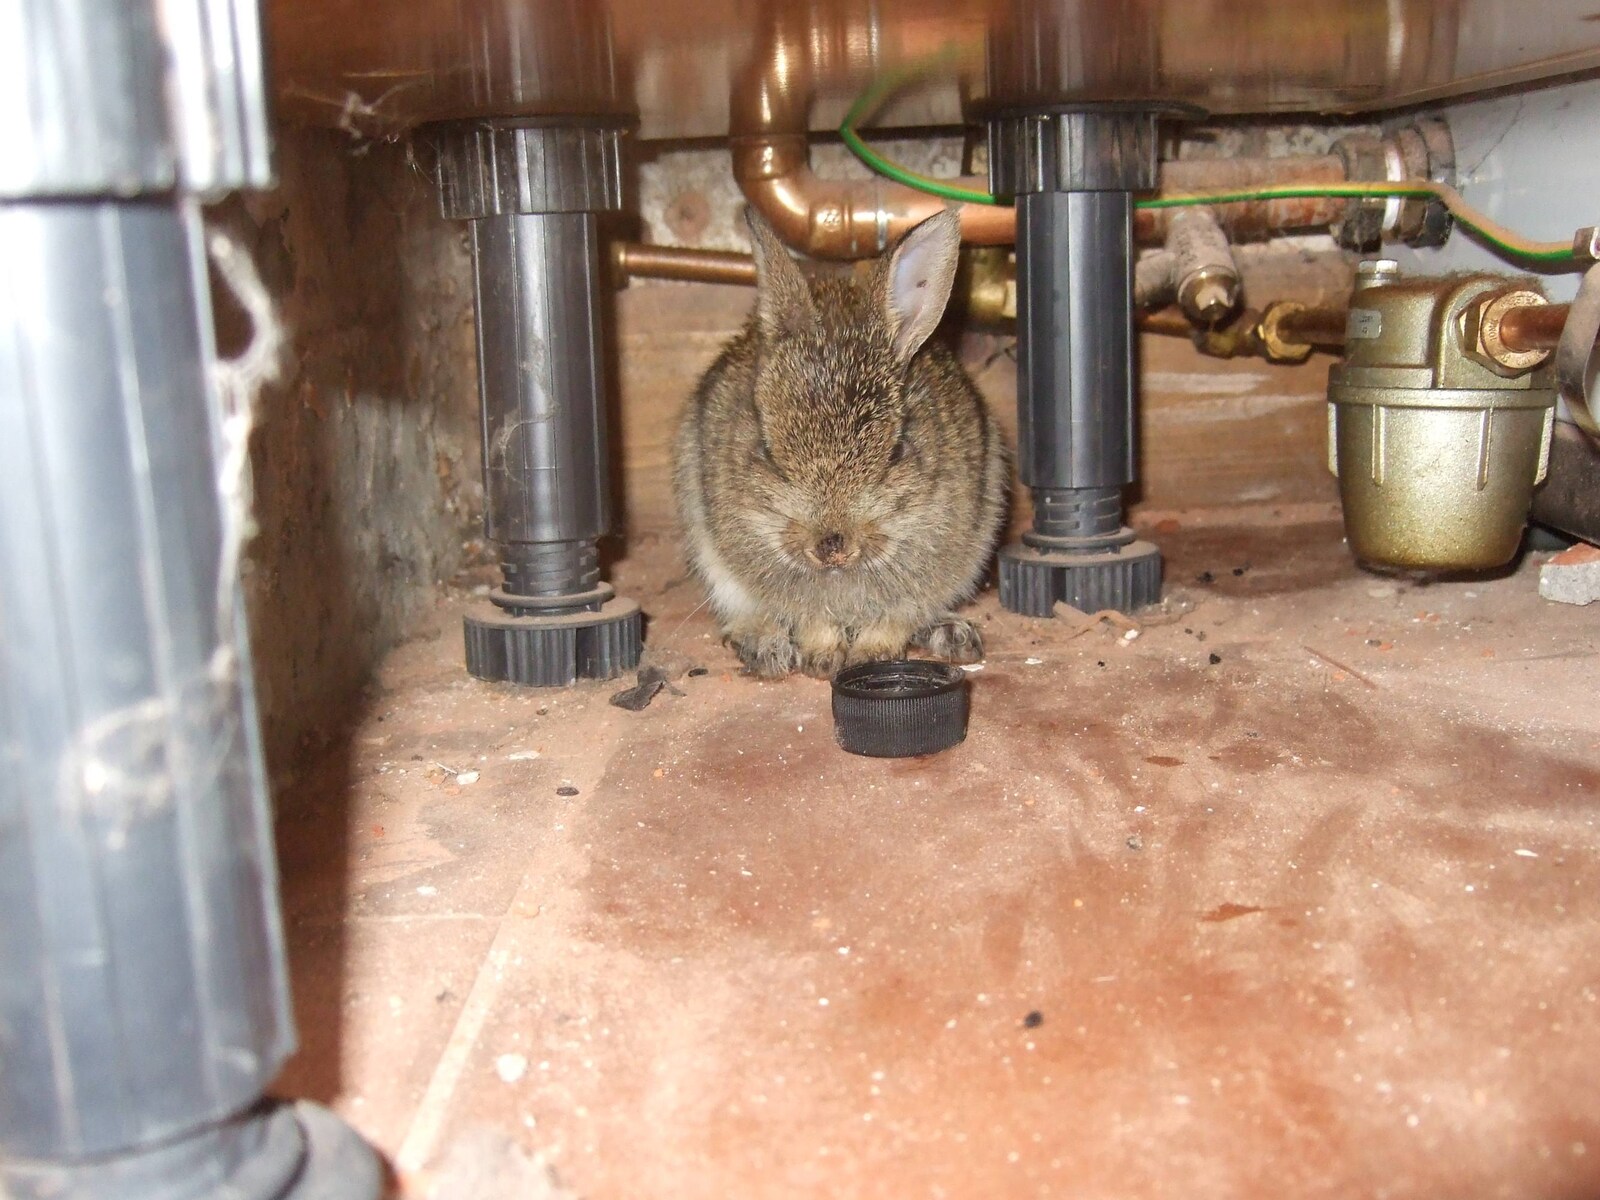 Pre-Wedding Beers at The Swan, Brome, Suffolk - 19th June 2010: An injured rabbit hides under a kitchen cabinet